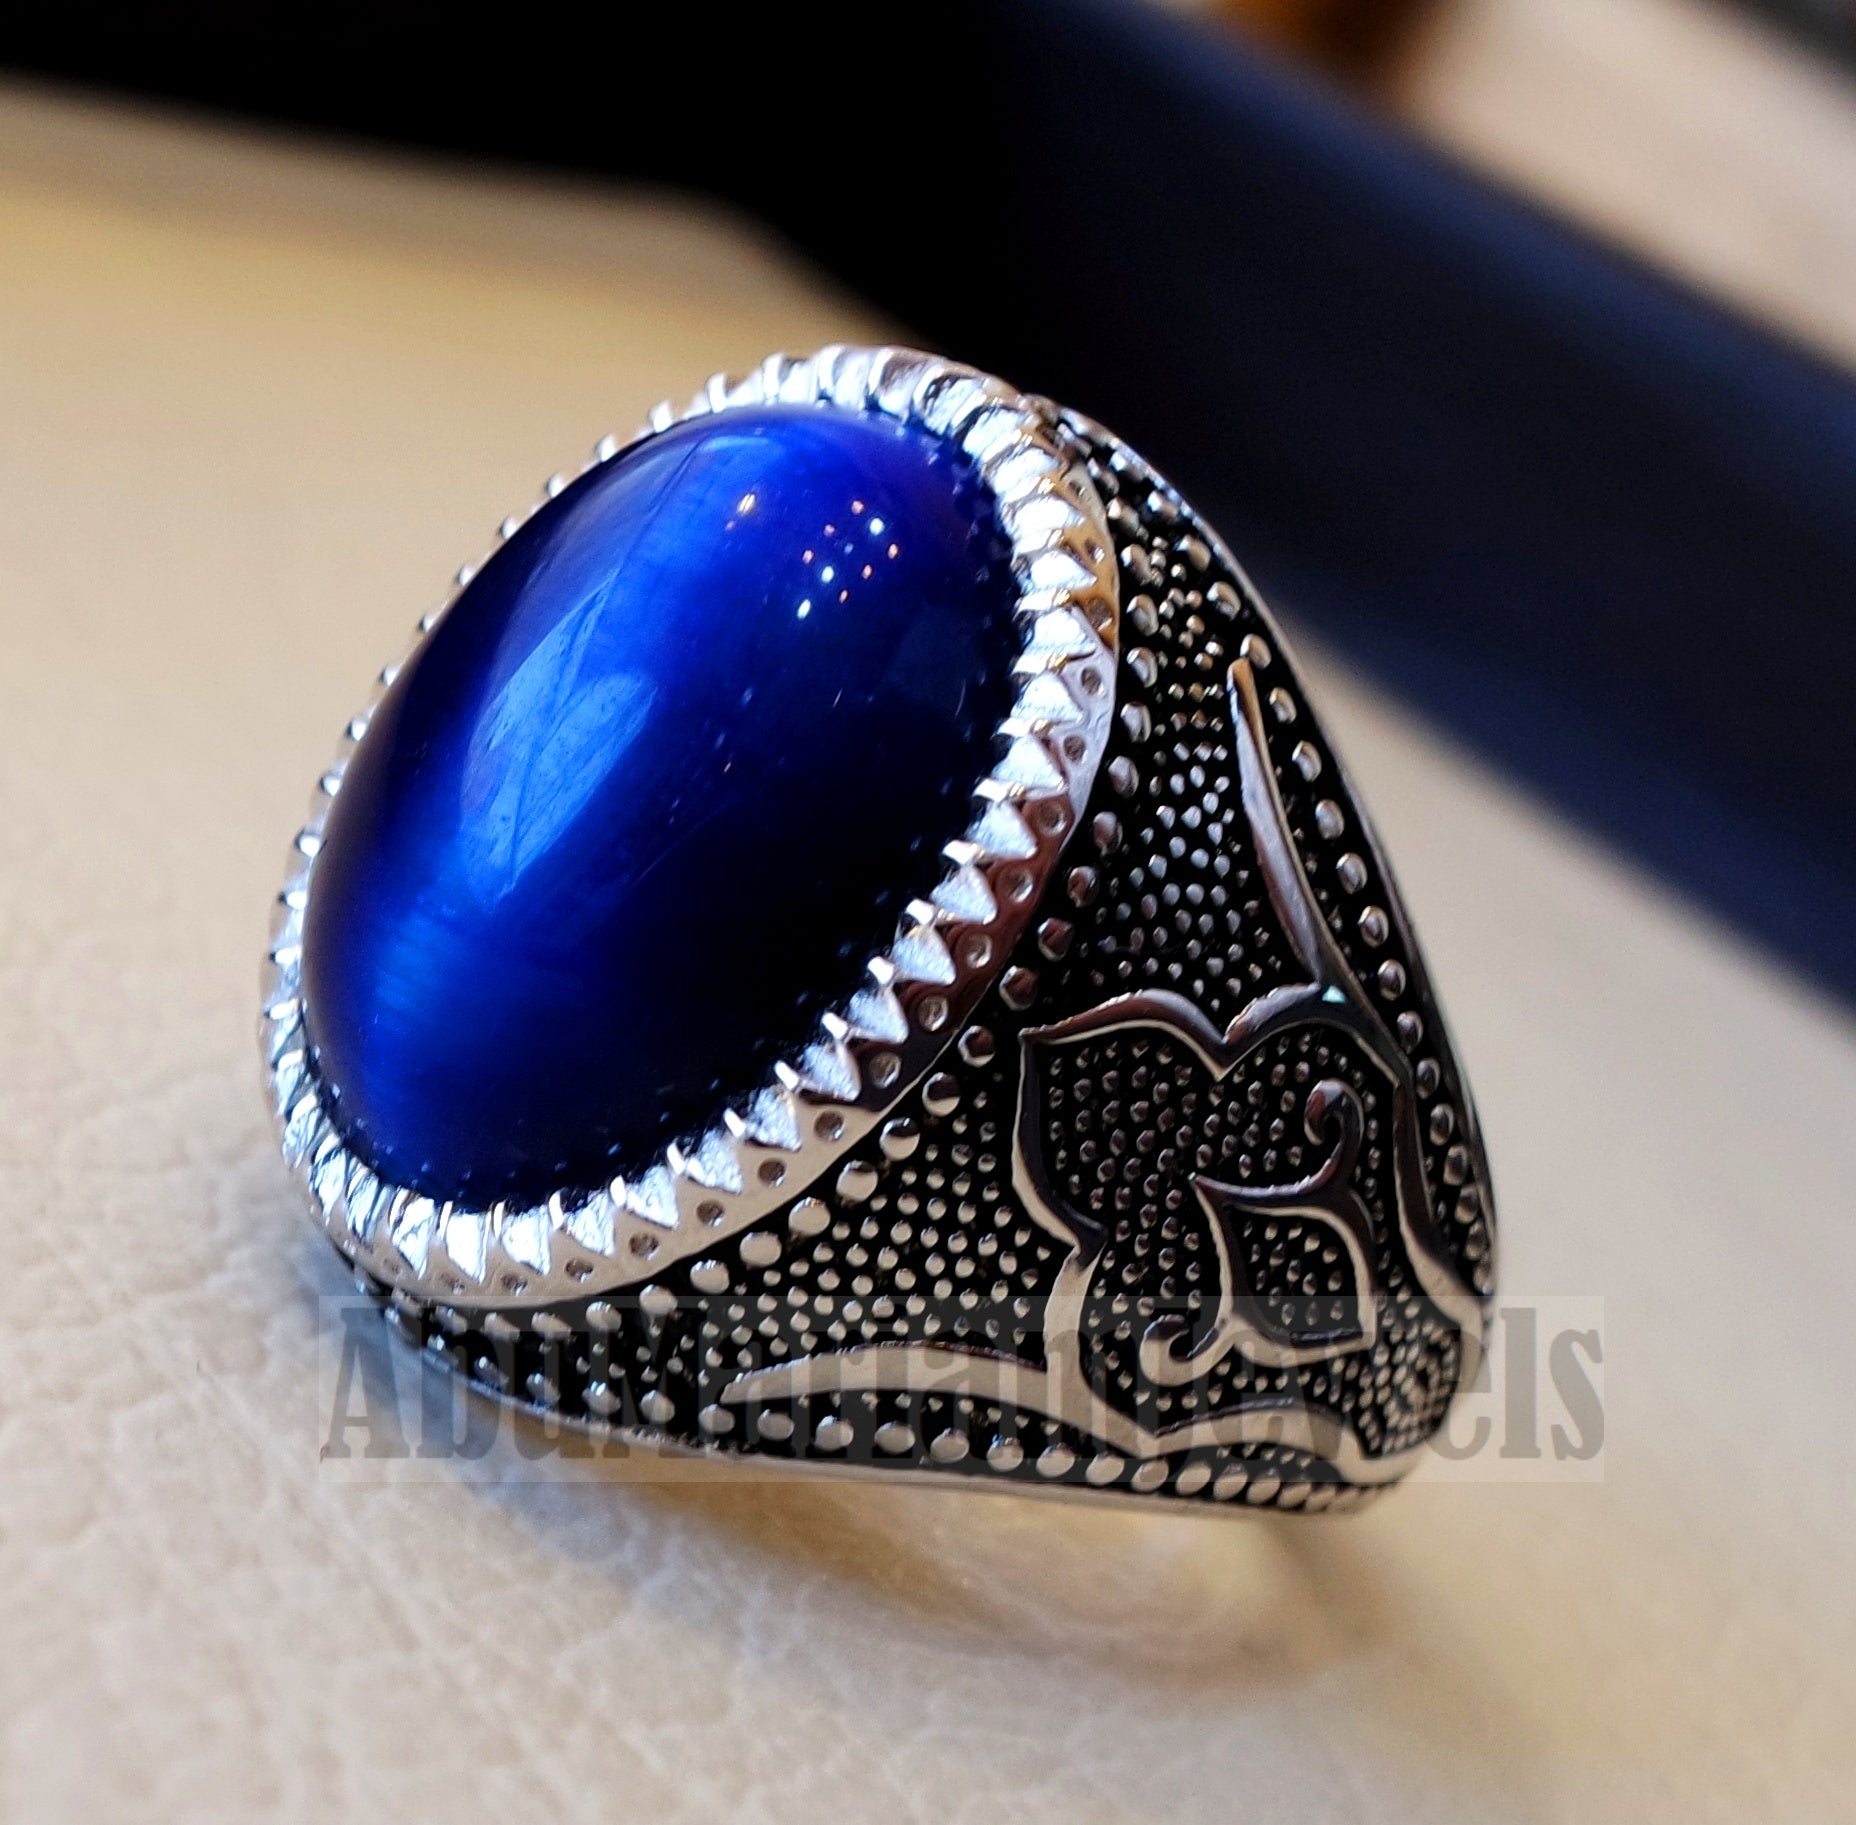 Princess Diamond Three Stone Ring with Blue Sapphire - Abhika Jewels